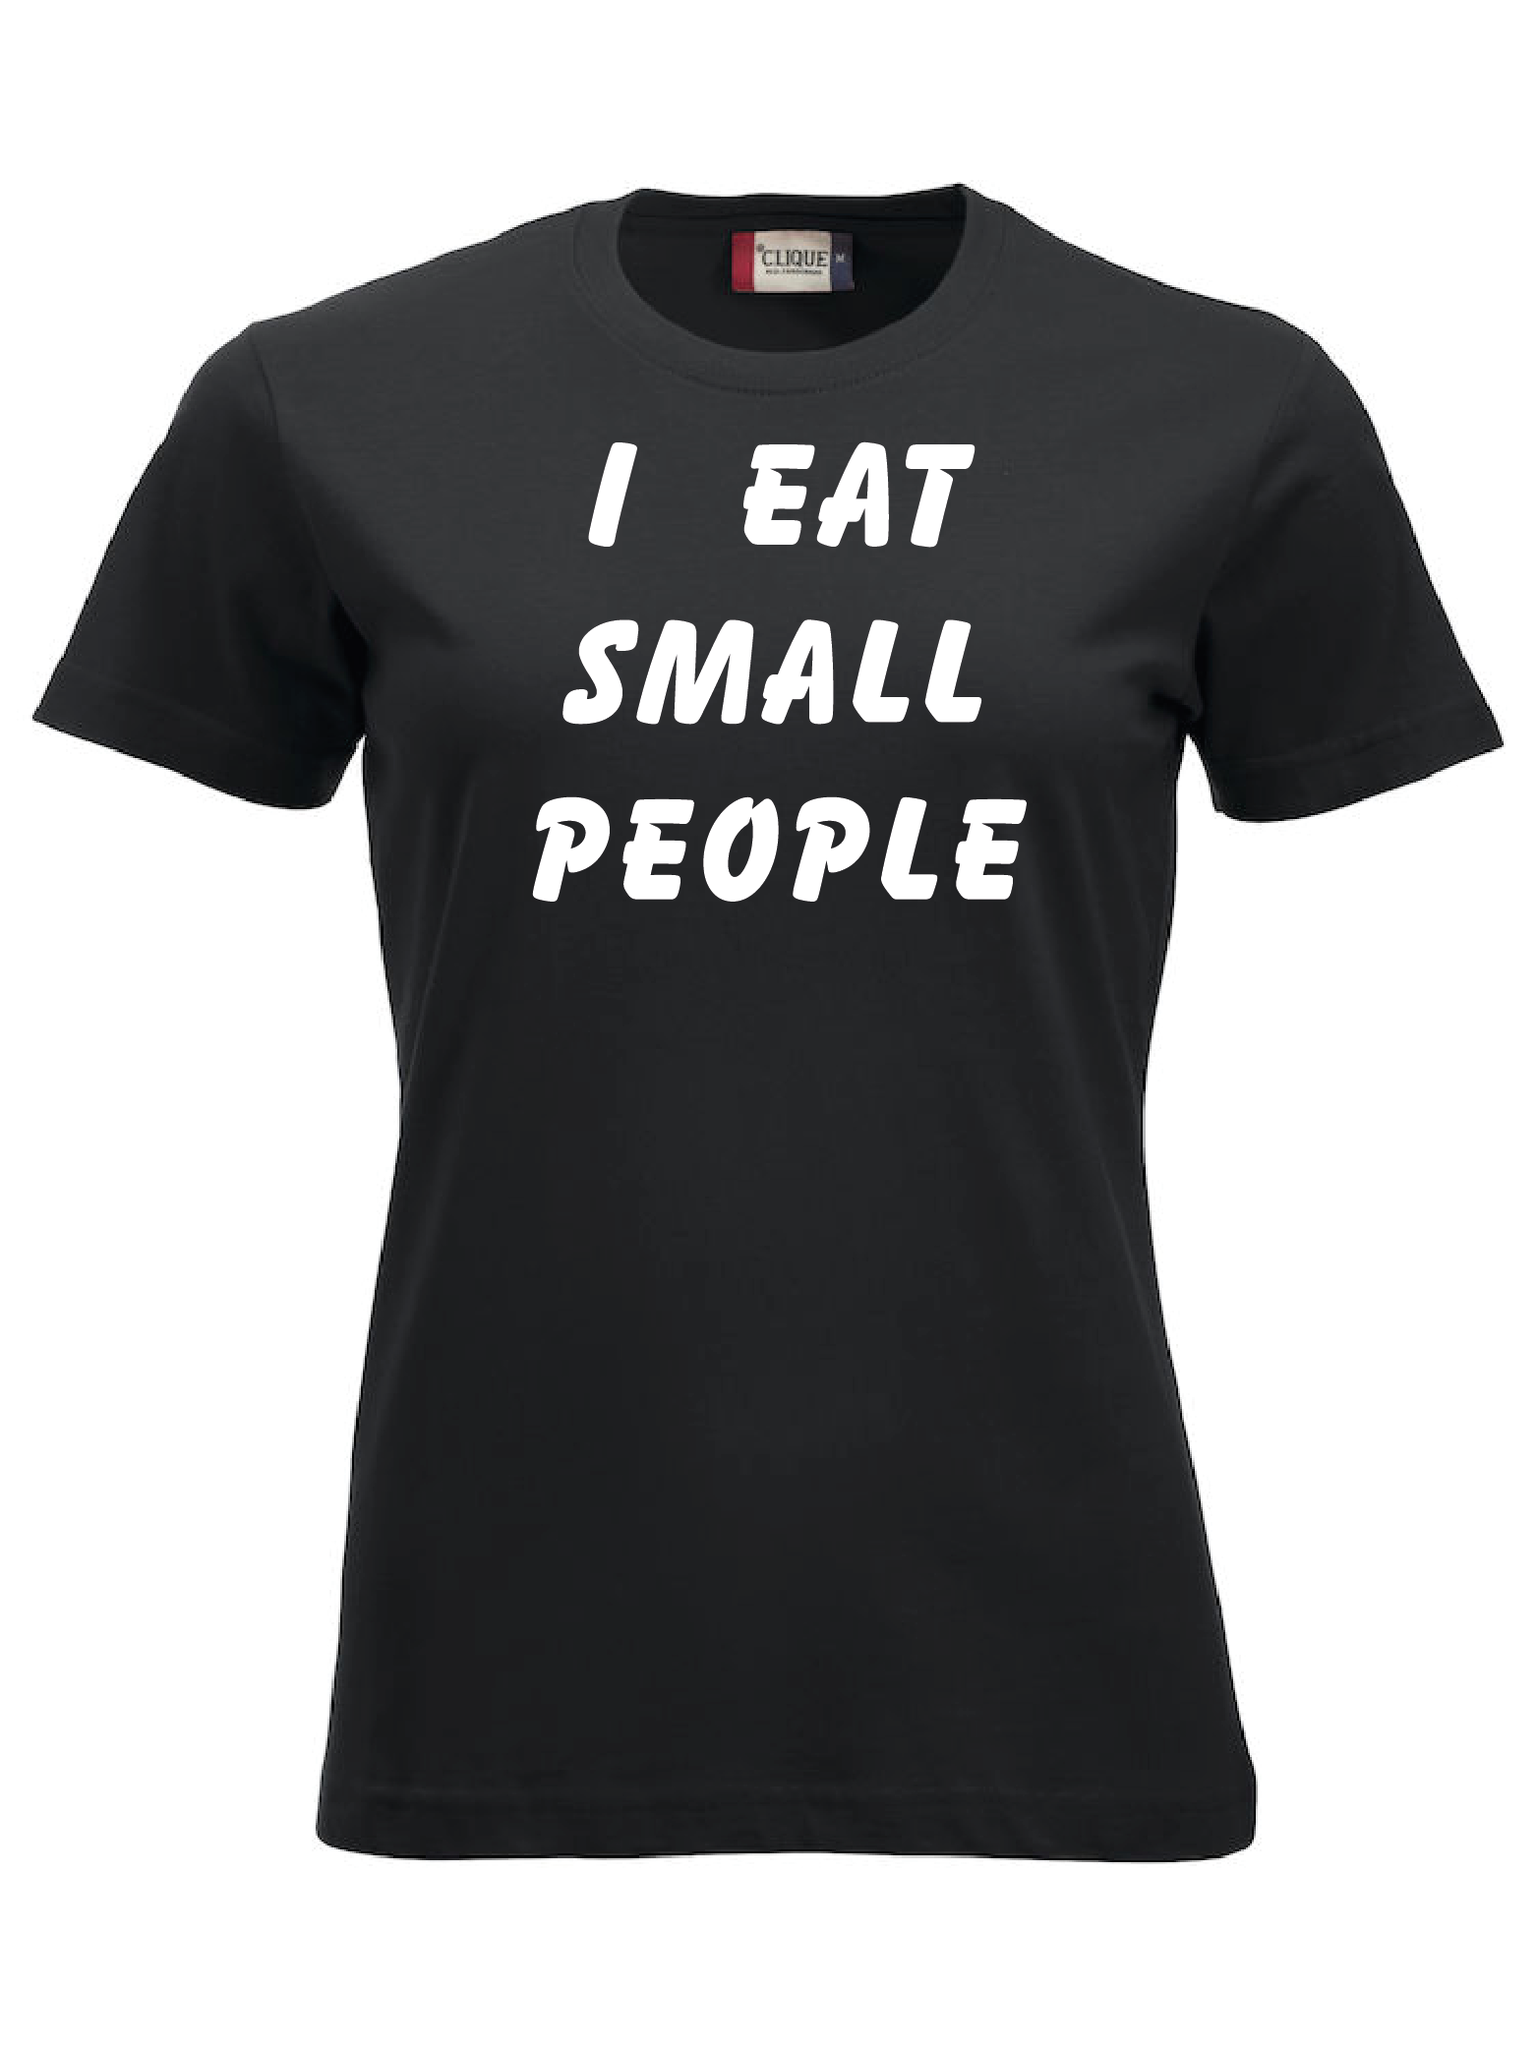 Dam T-shirt "I EAT SMALL PEOPLE"